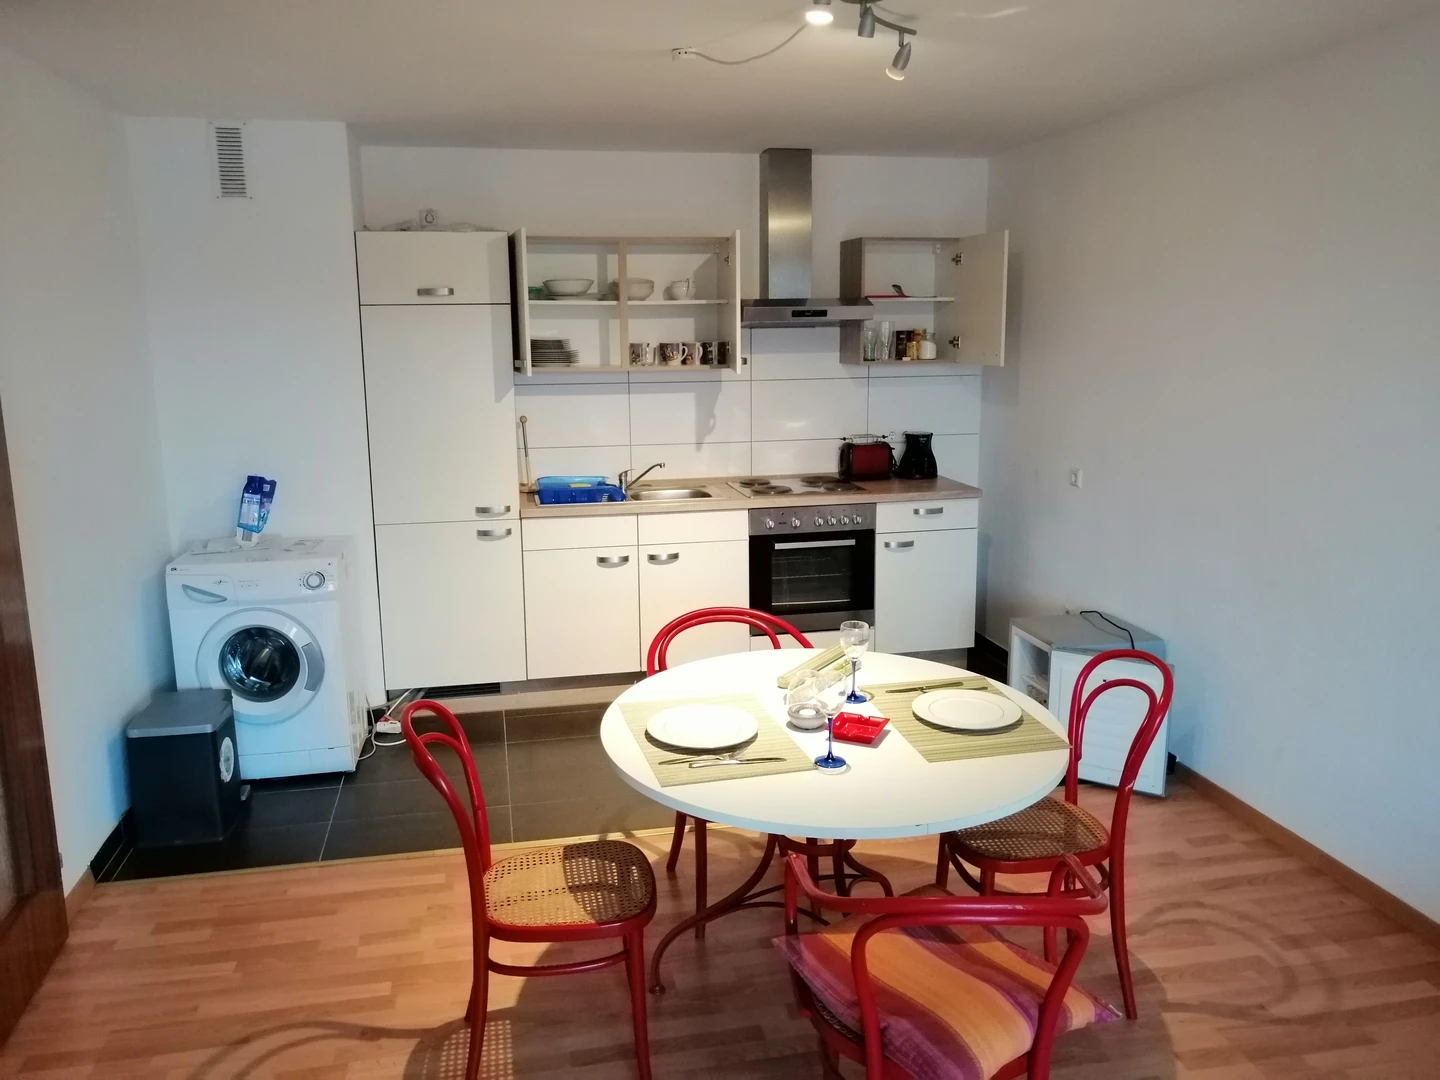 Cheap private room in Kaiserslautern